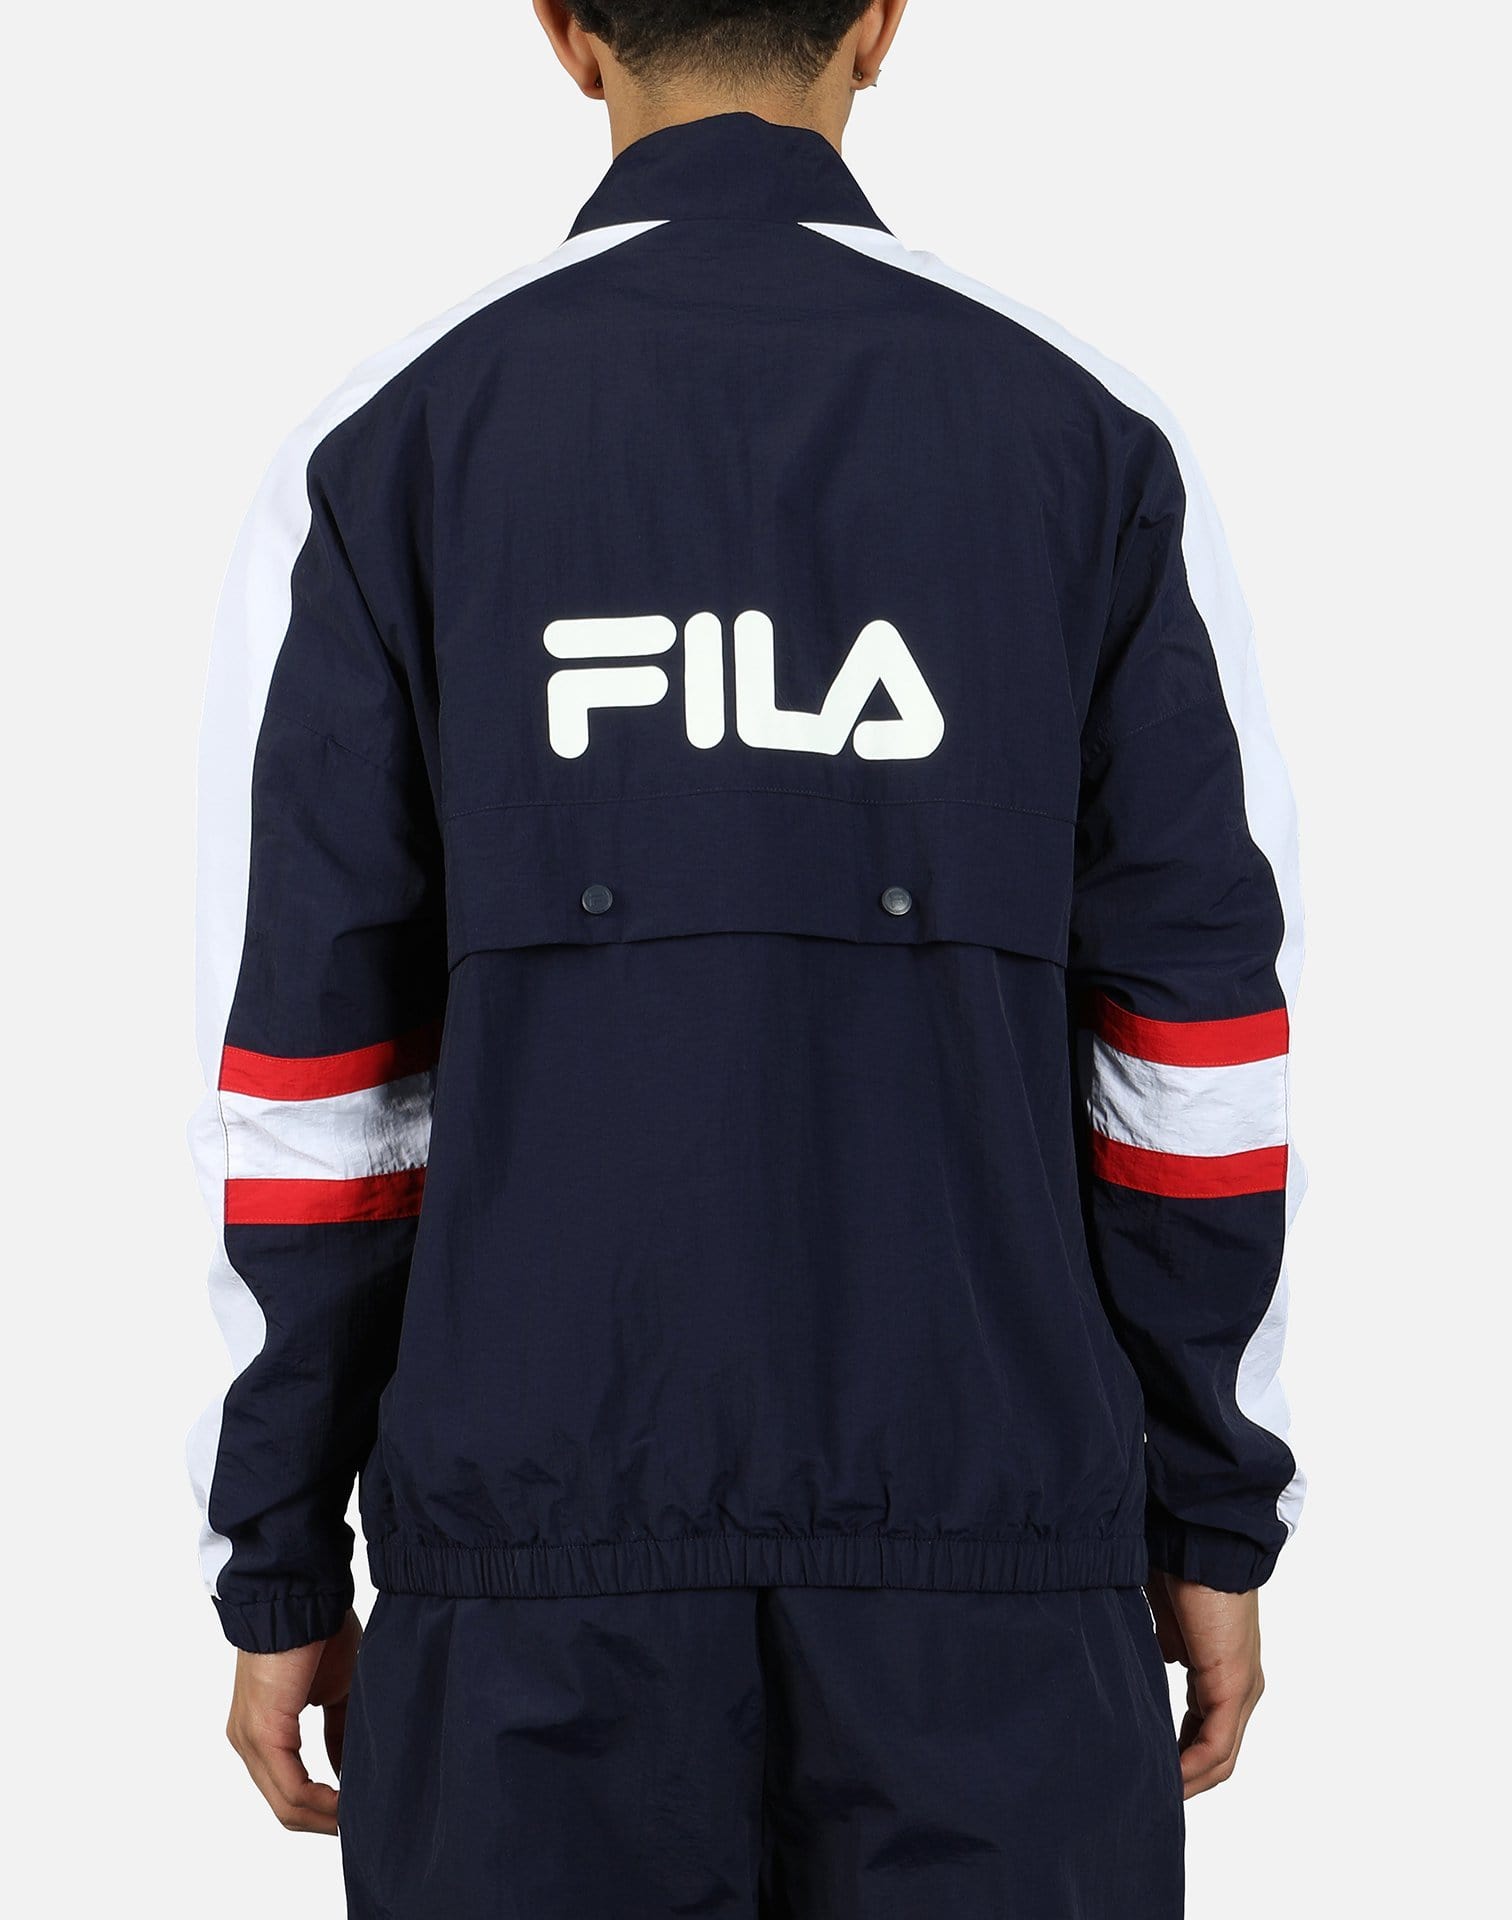 FILA Men's Carter Colorblock Woven Jacket